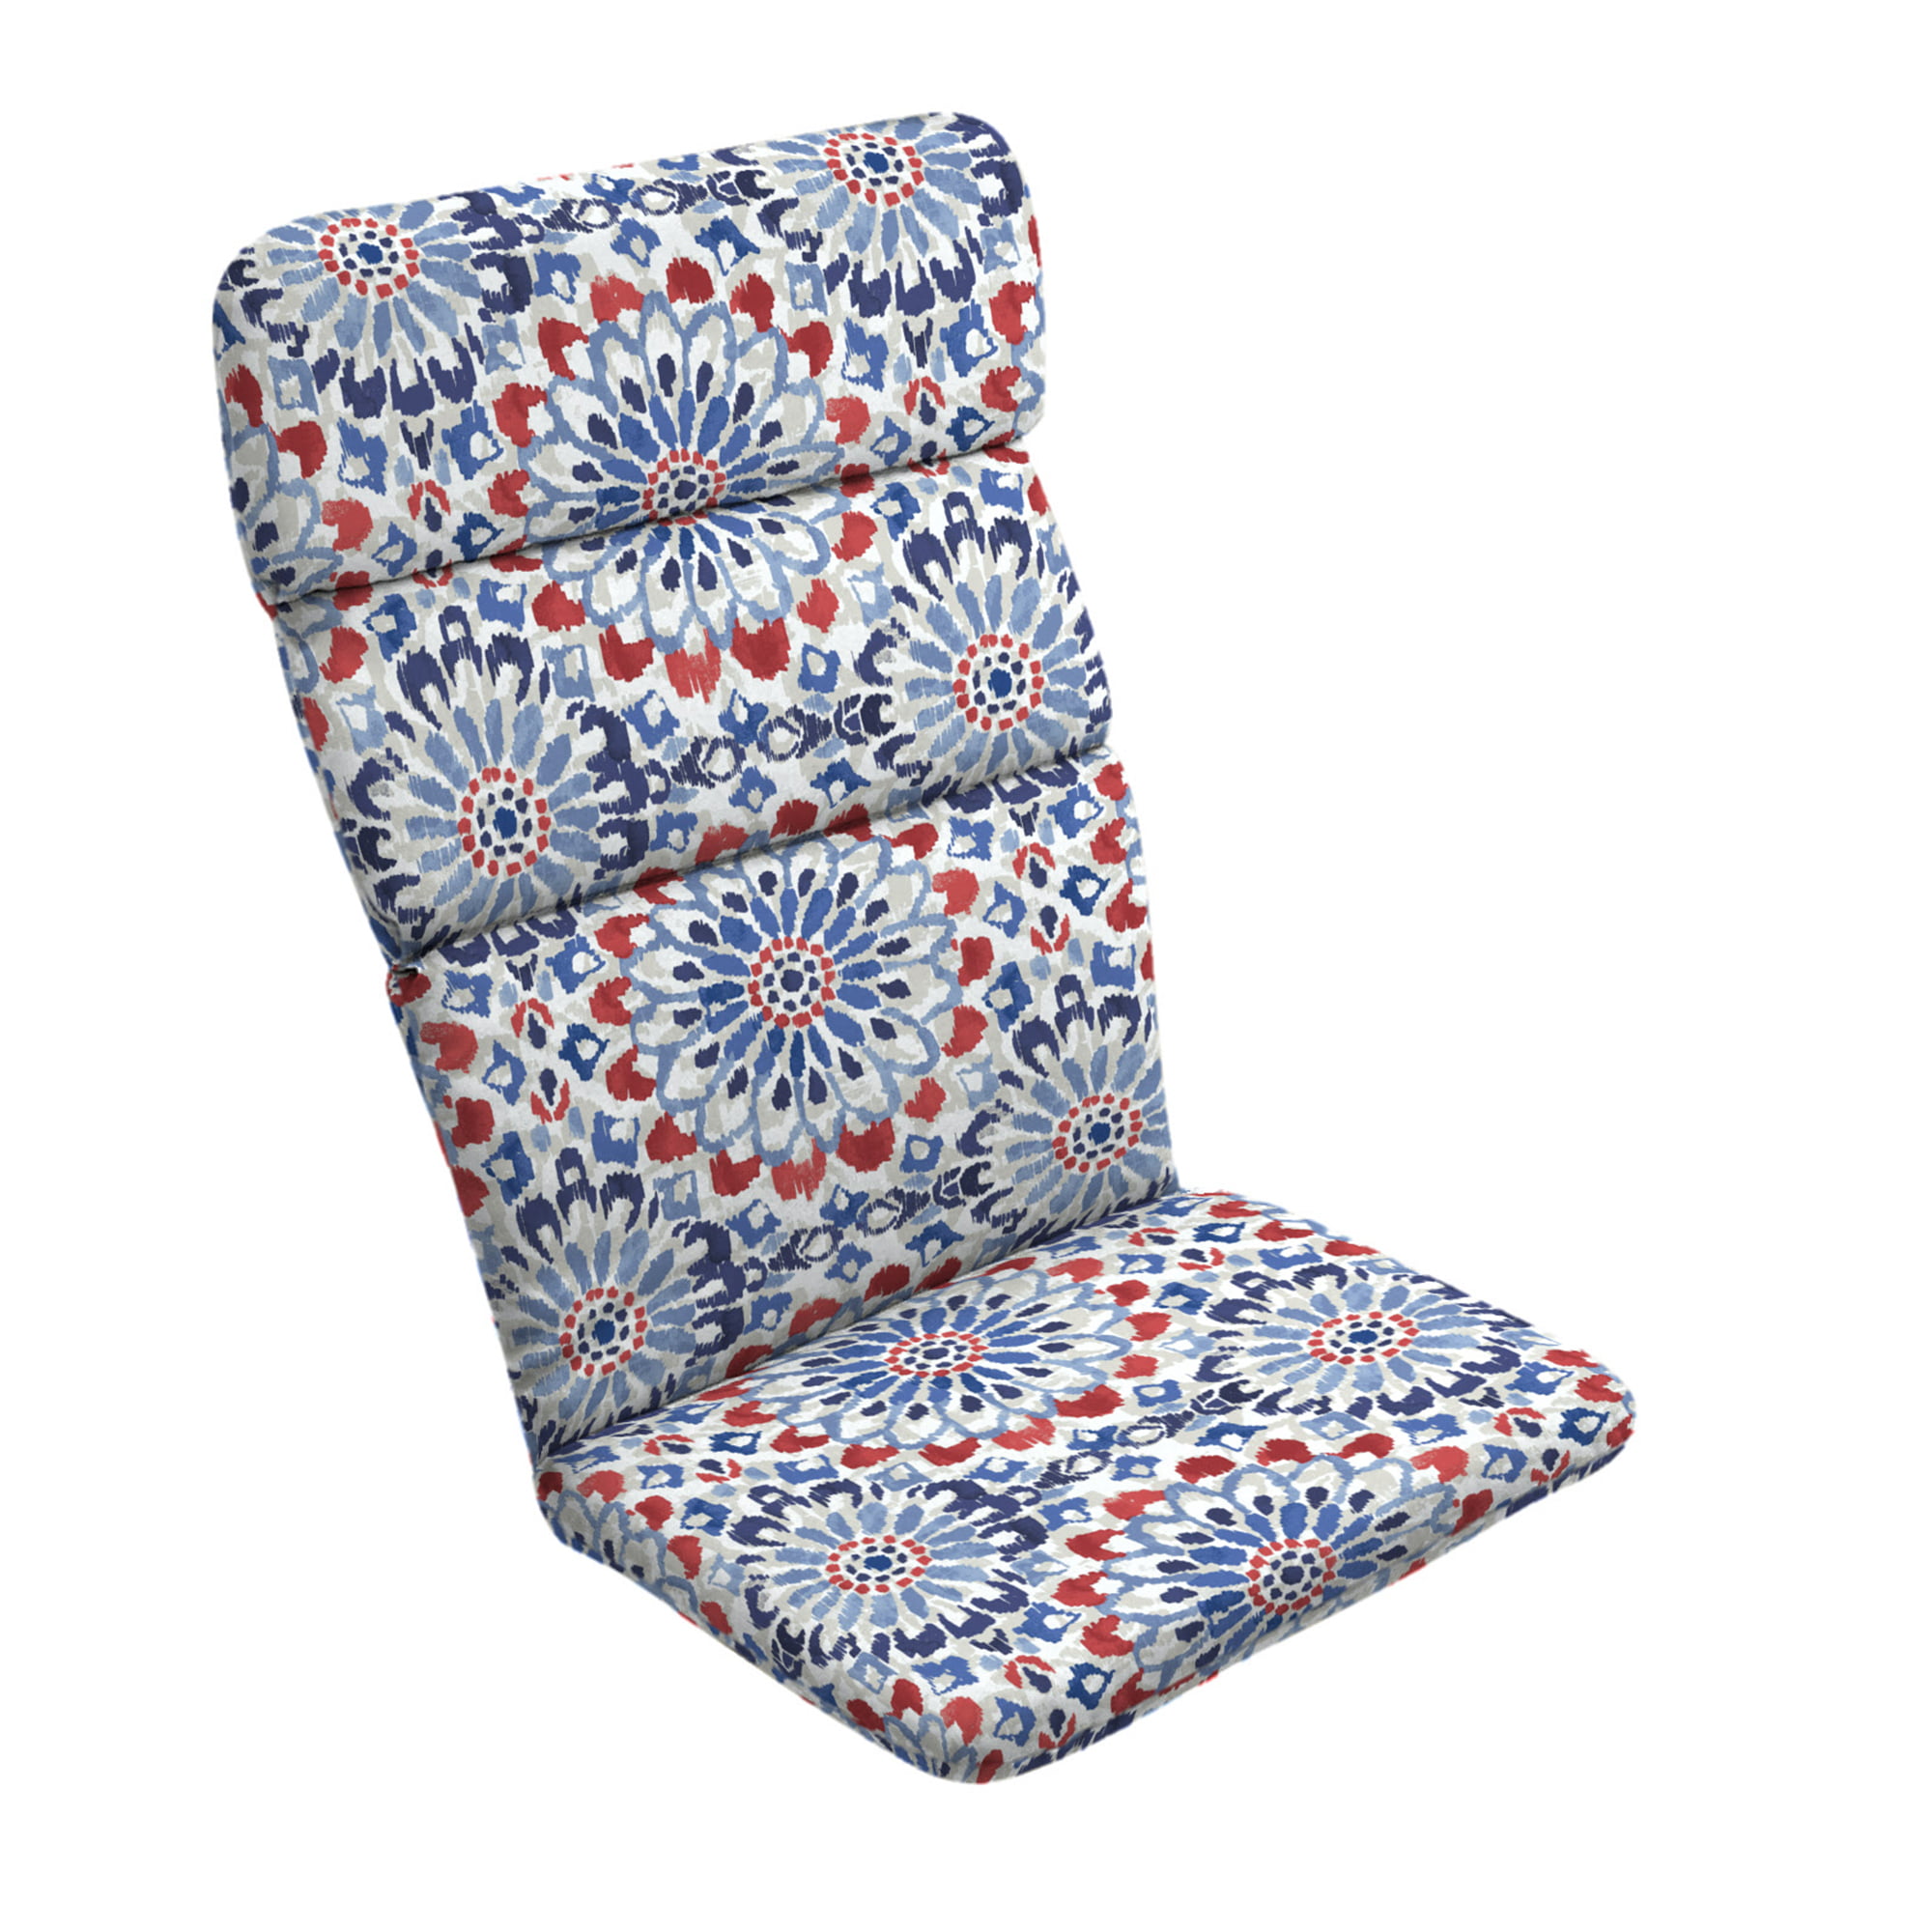 Minimalist White Chair Cushions Walmart for Small Space